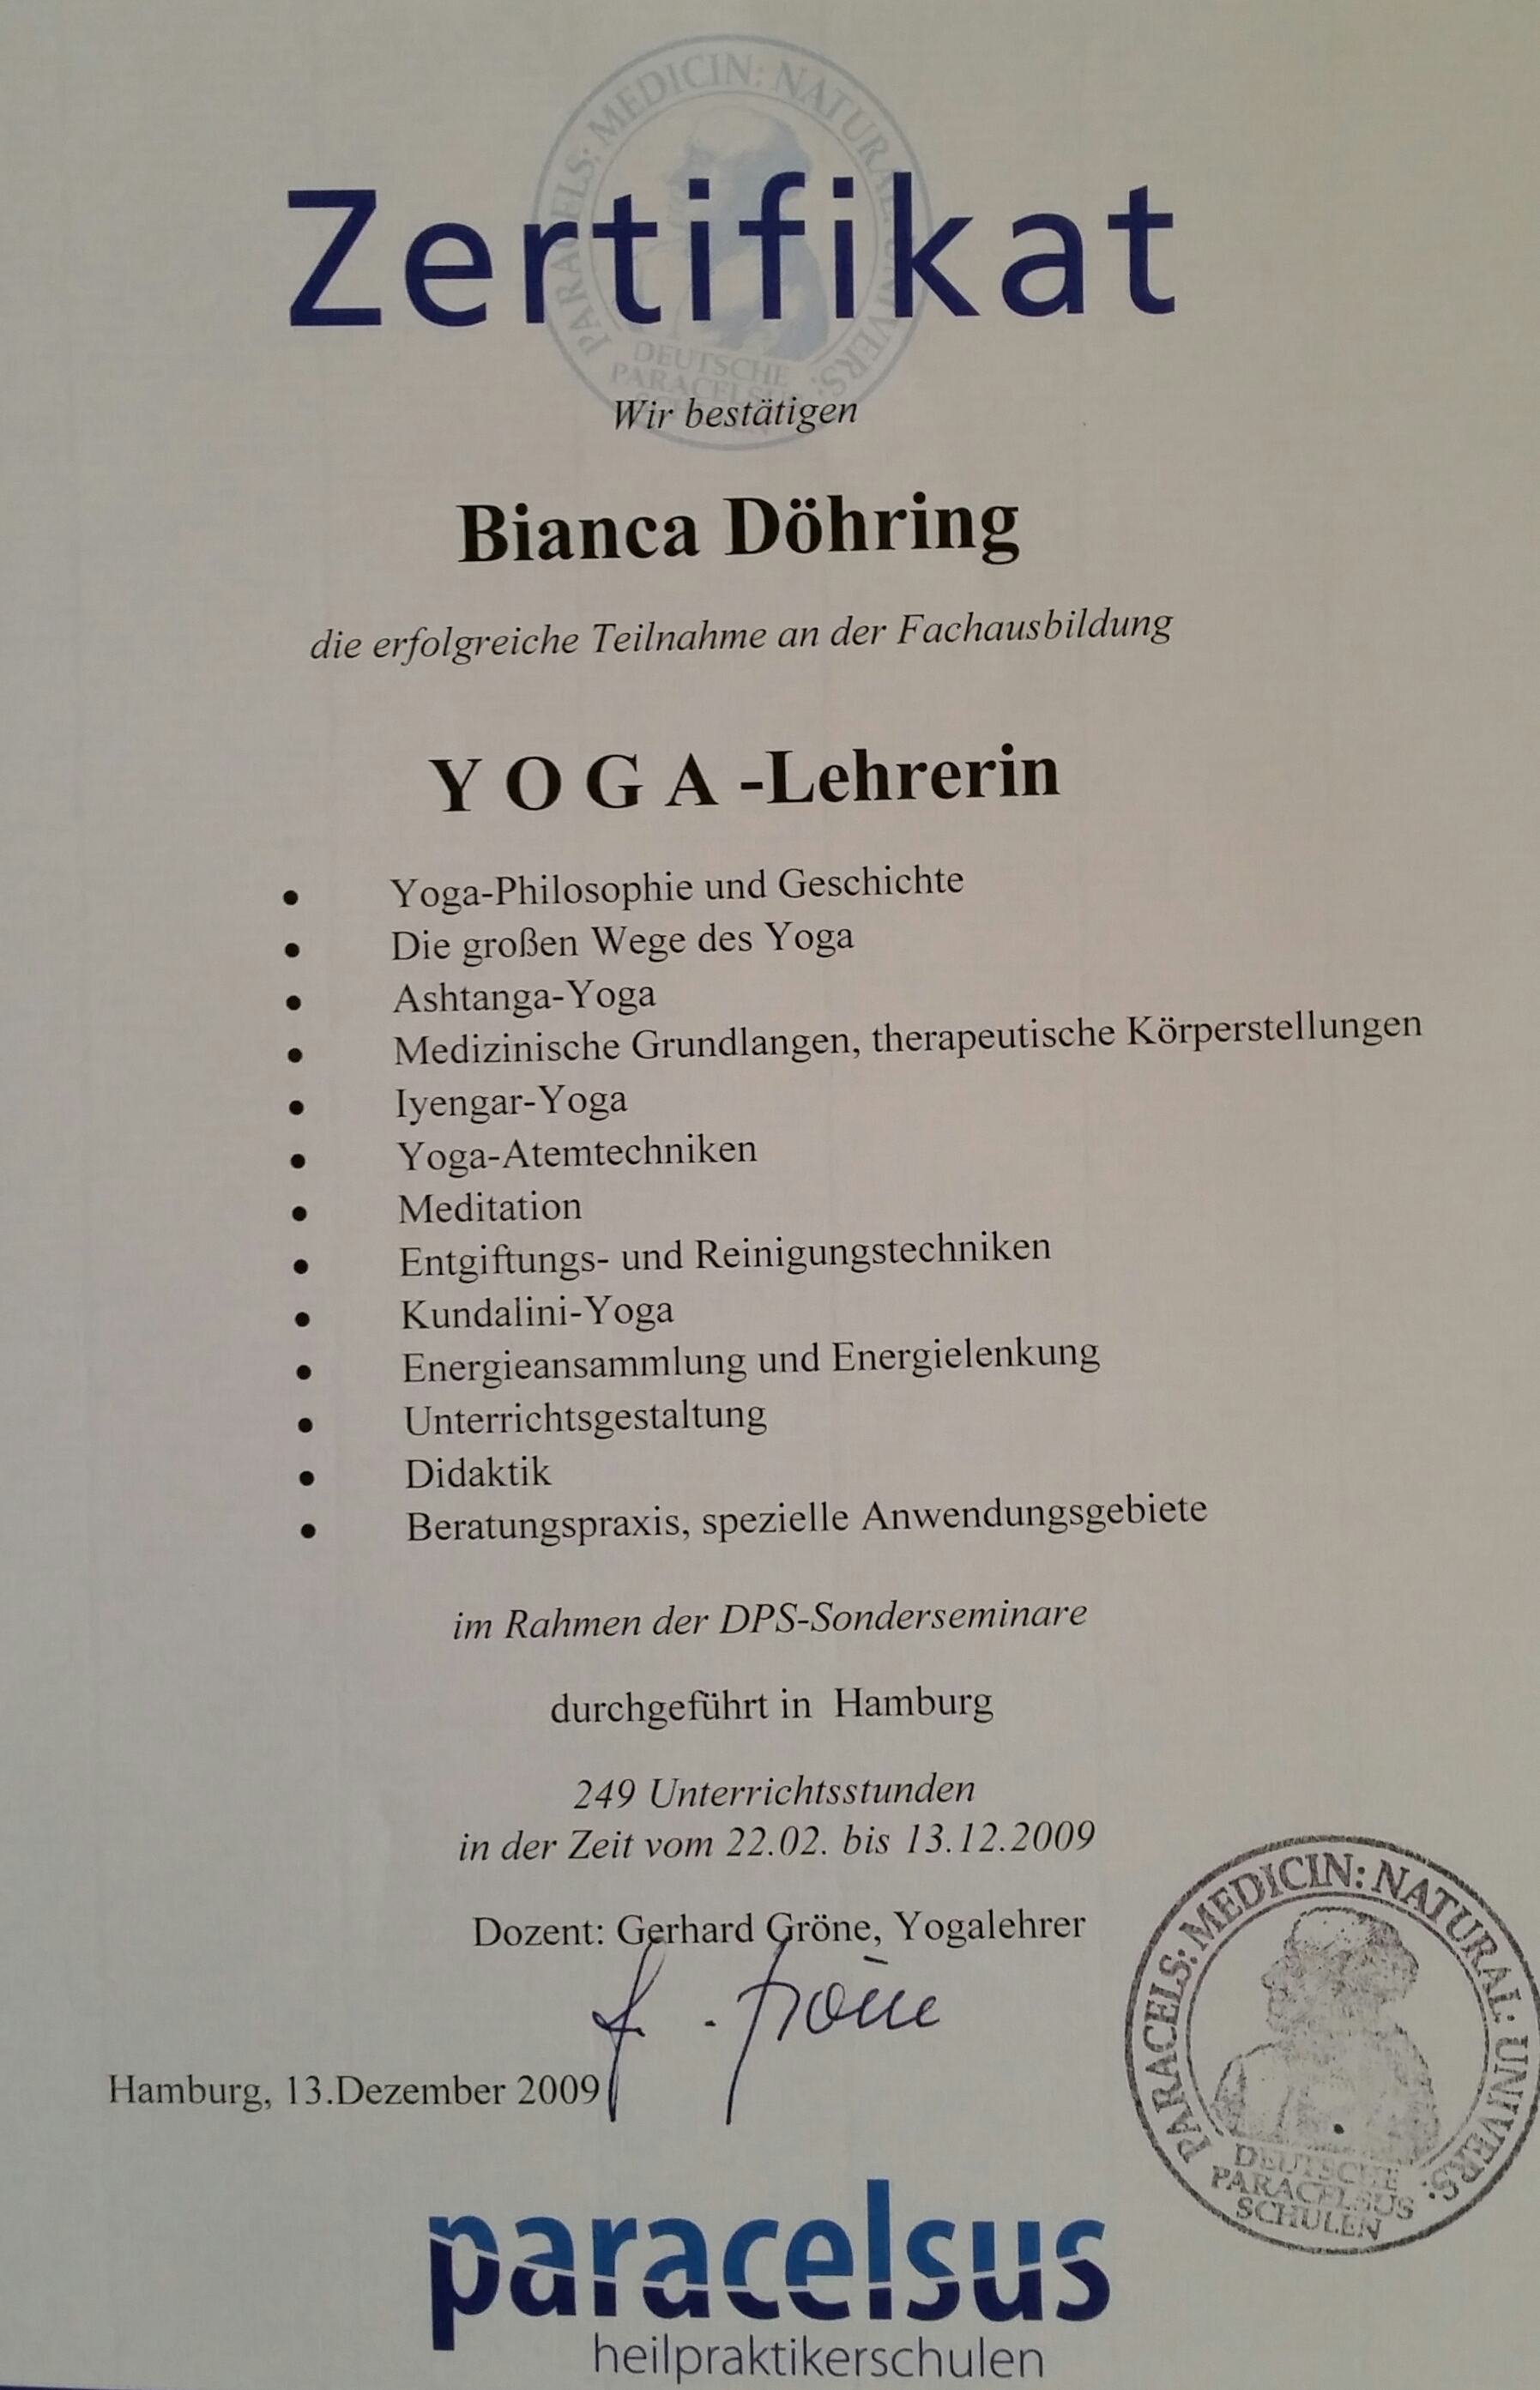 Bianca Döhring Yoga-Lehrerin Zentifkat Urkunde Zeugnis